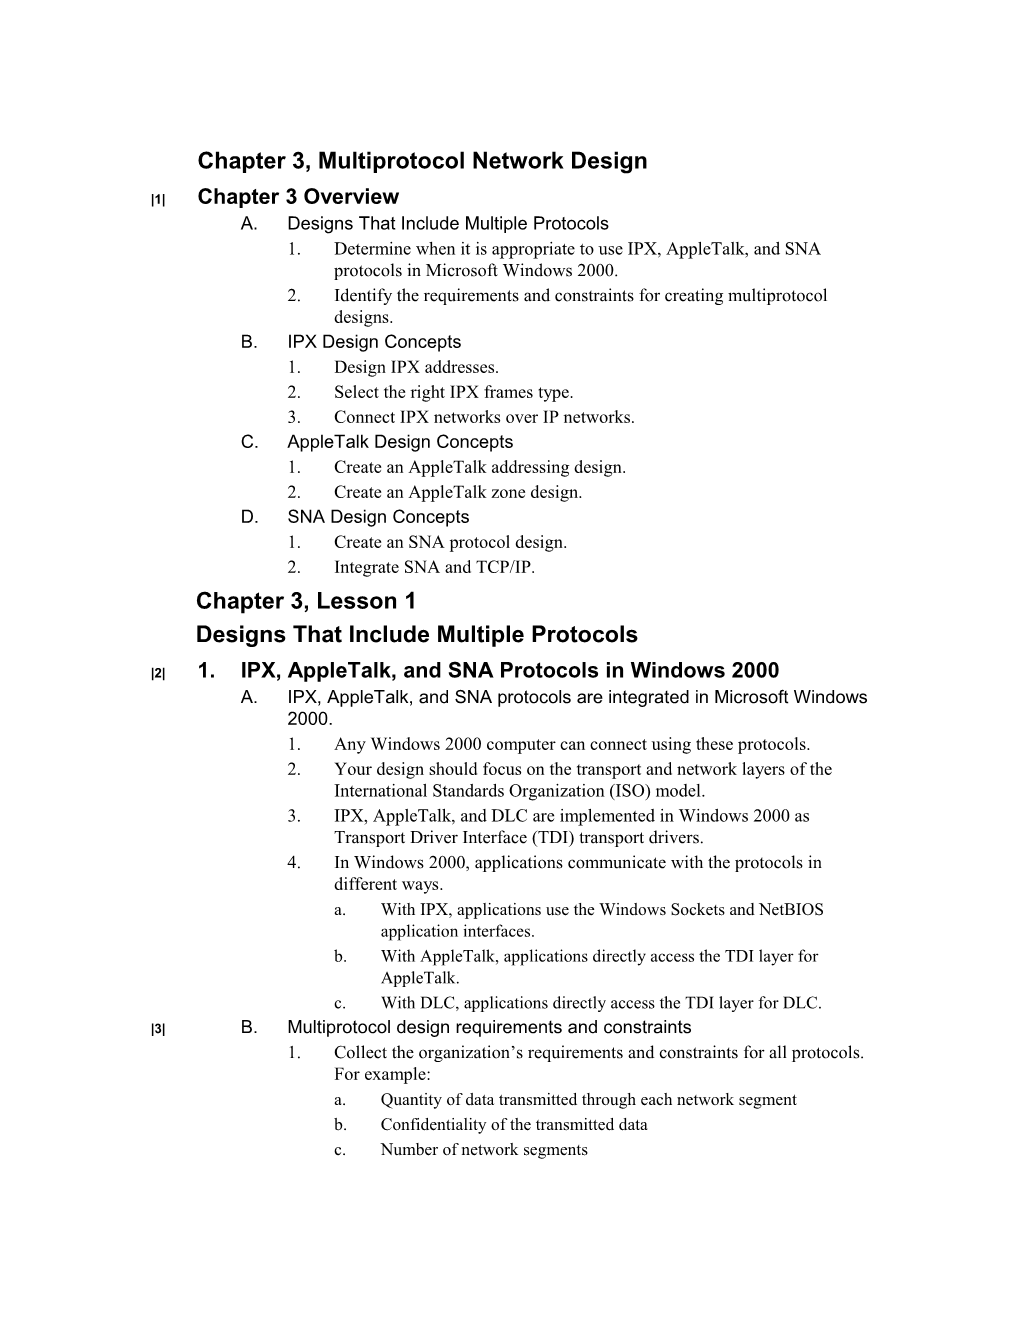 Chapter 3: Multiprotocol Network Design